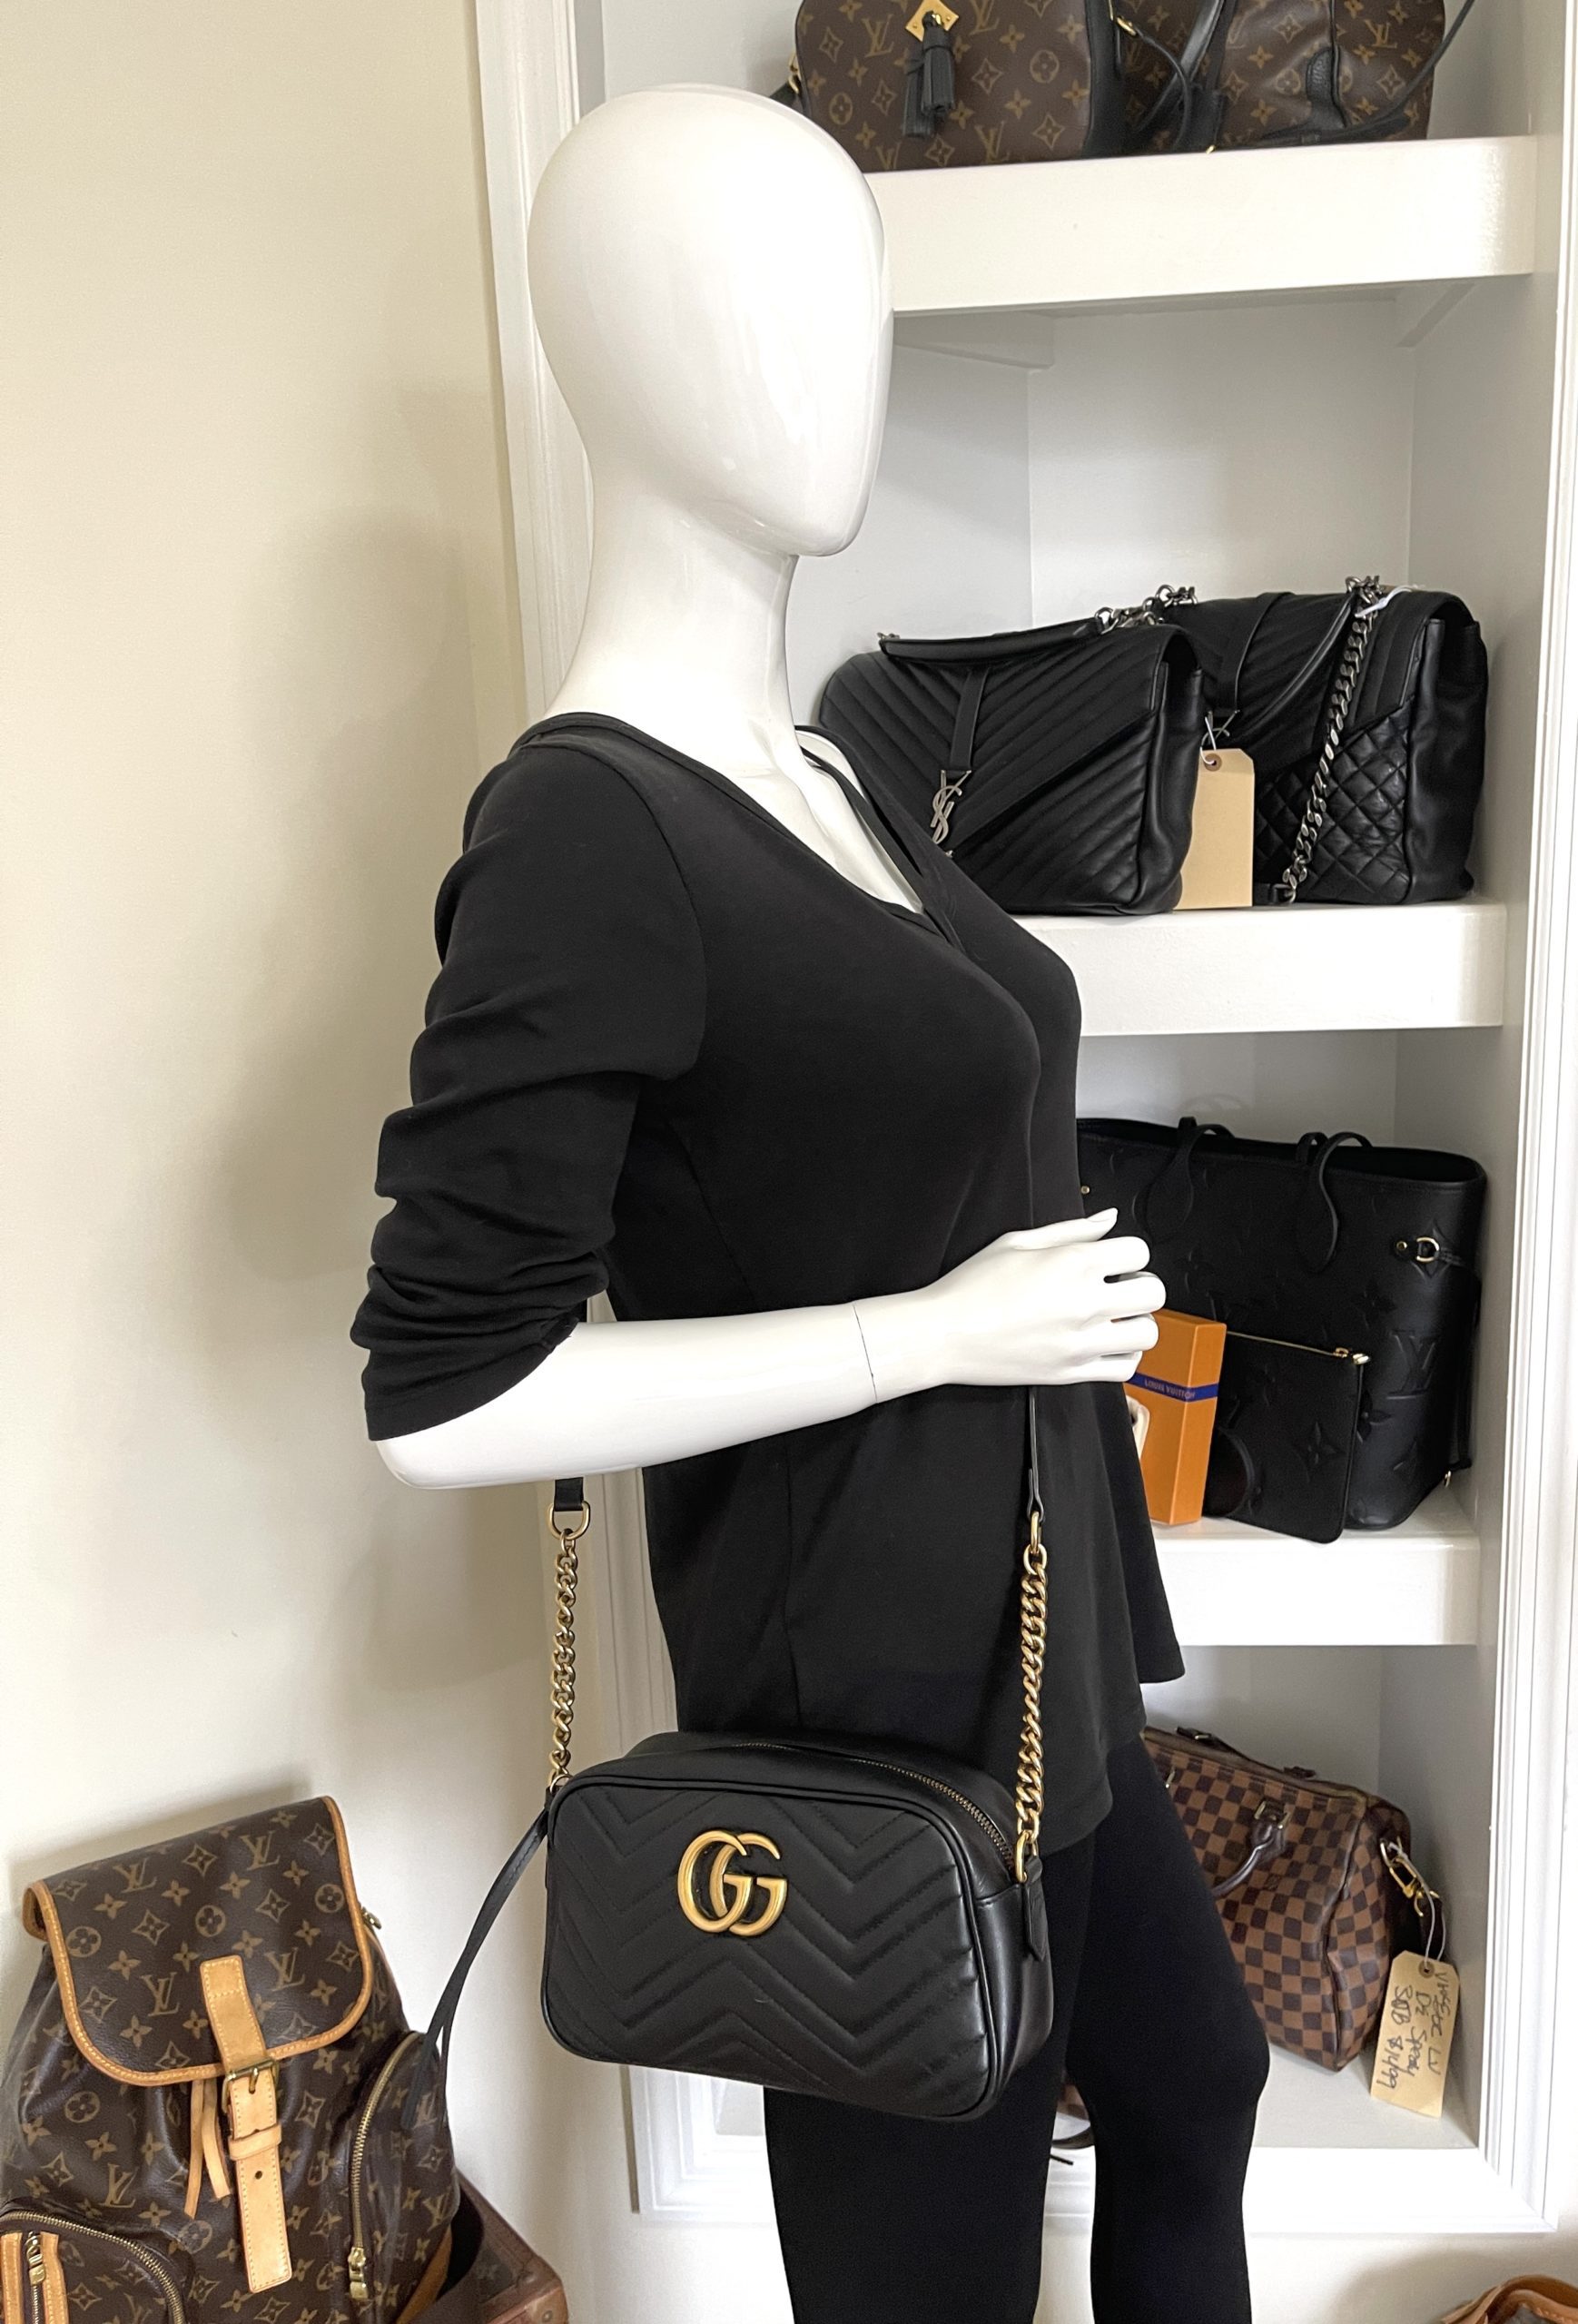 Gucci GG Marmont Small Matelassé Shoulder Bag - Farfetch